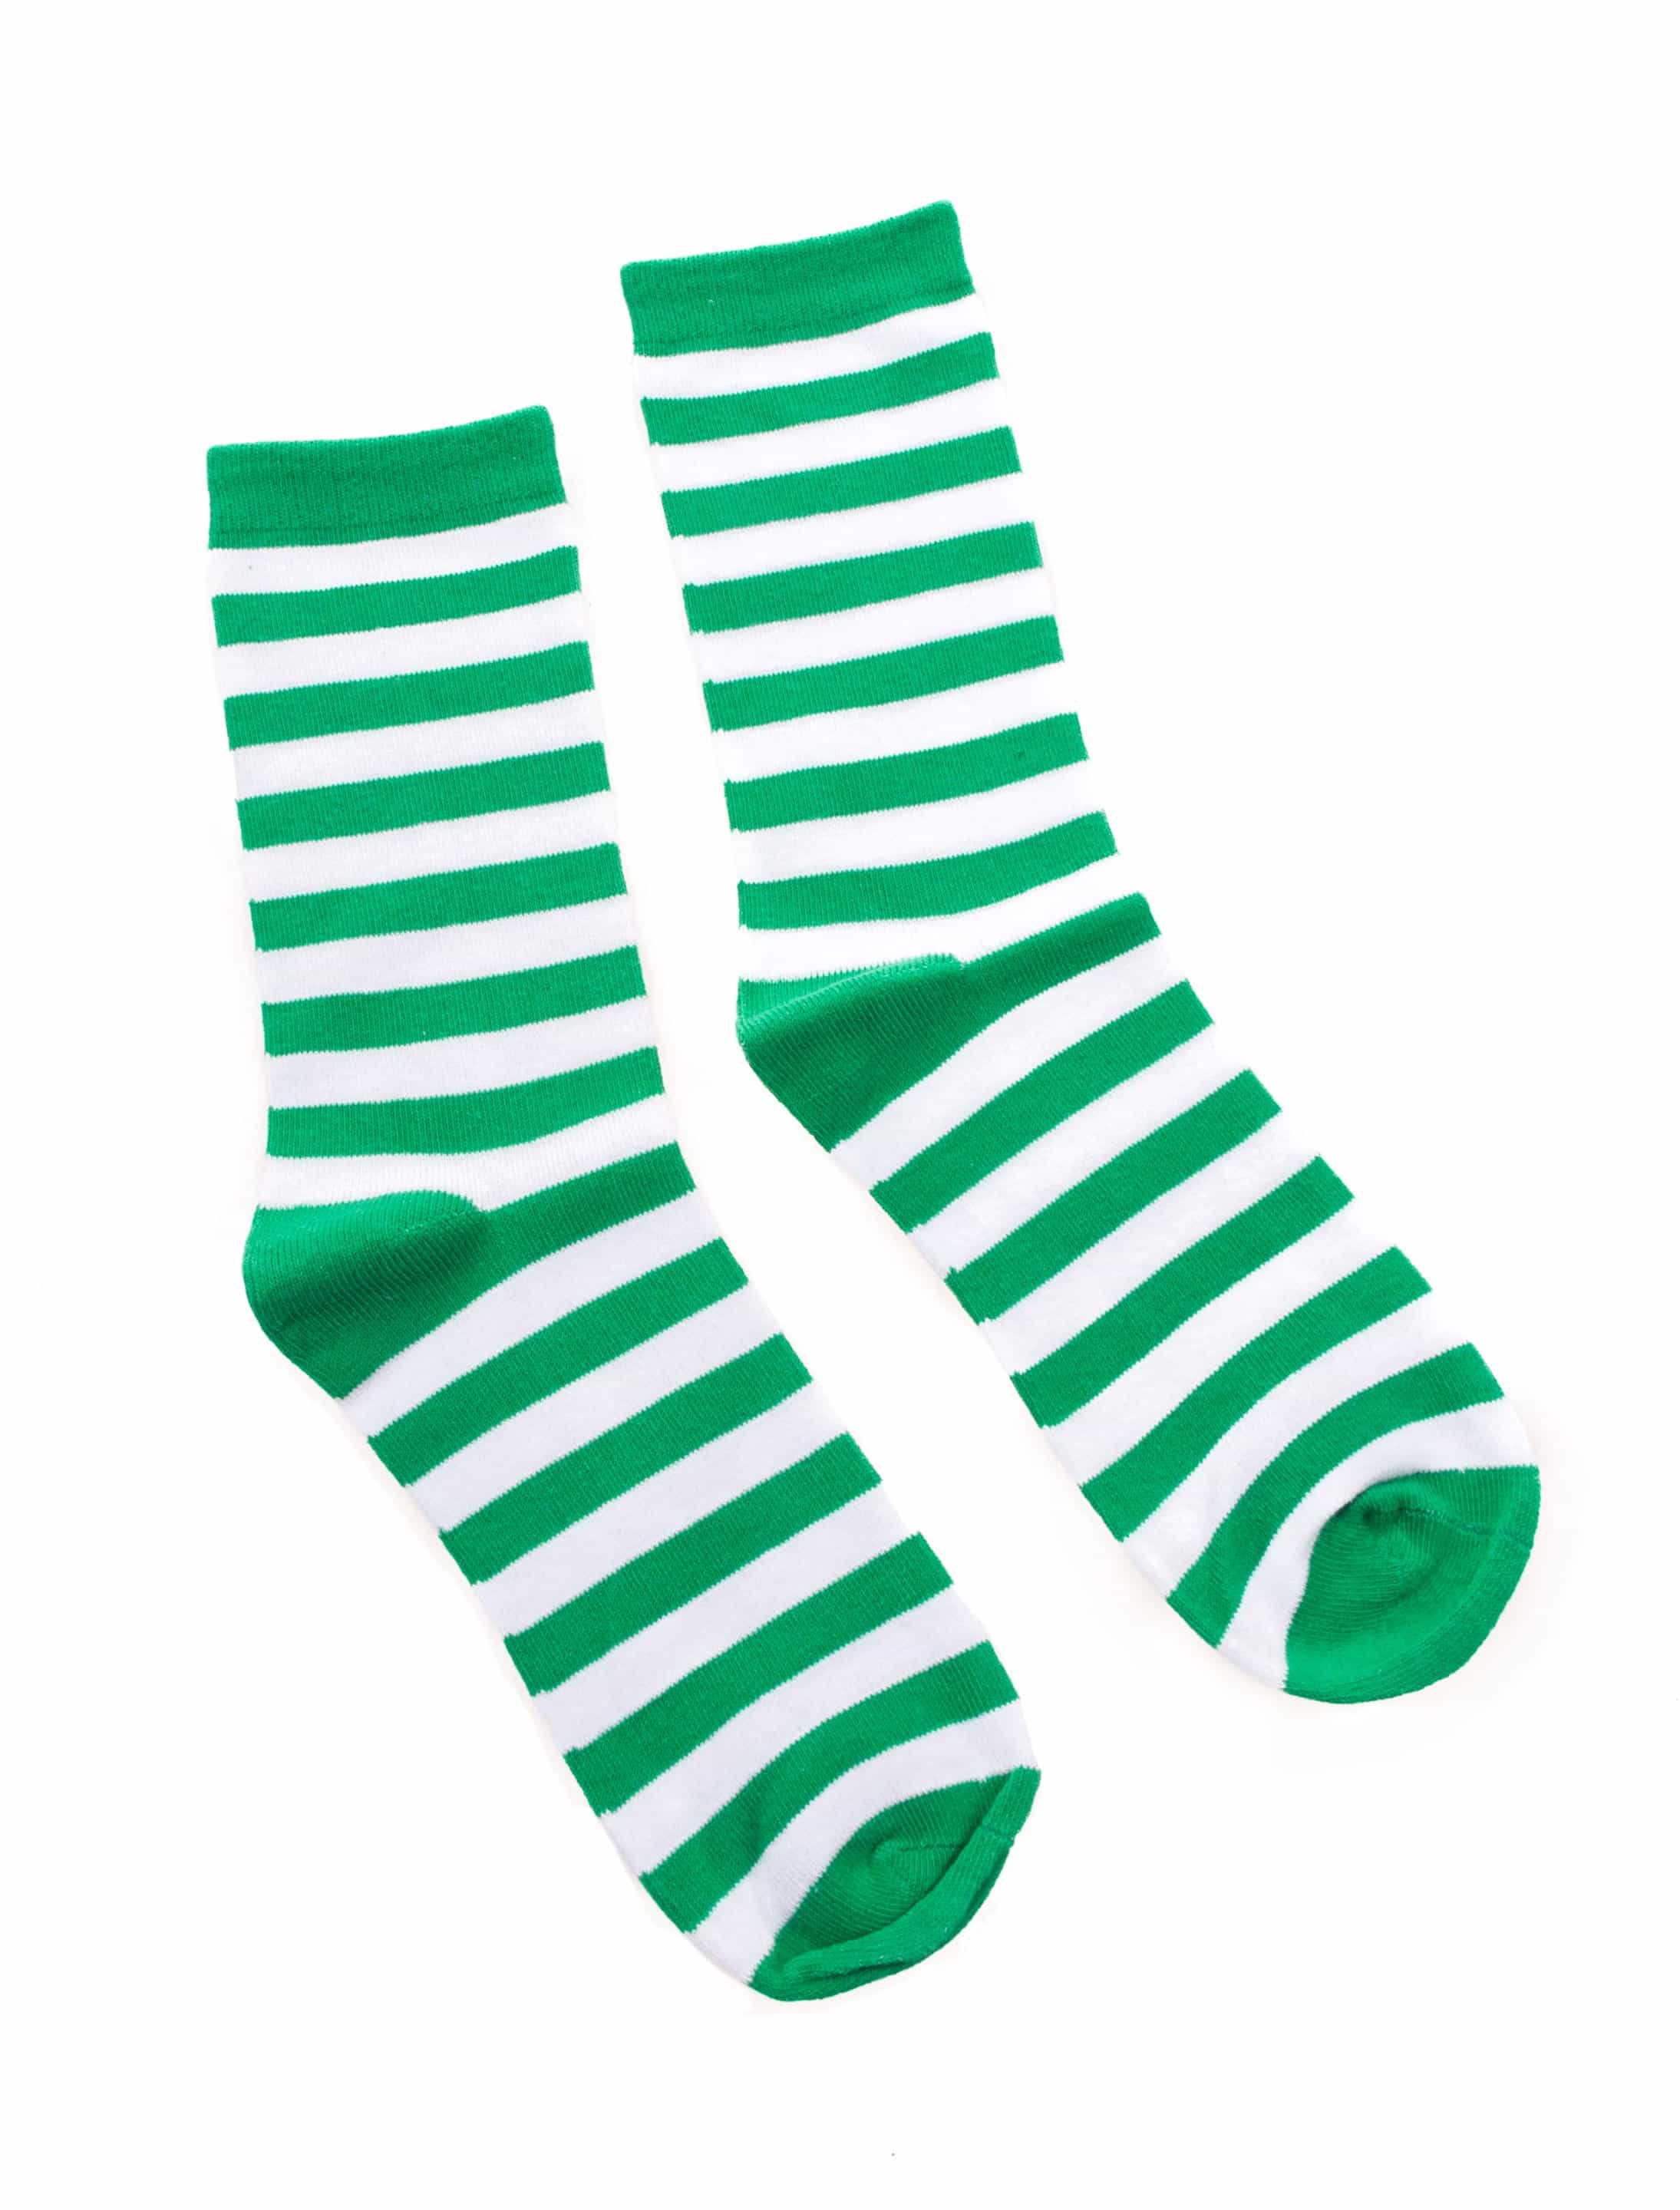 Socken gestreift grün/weiß 35-40